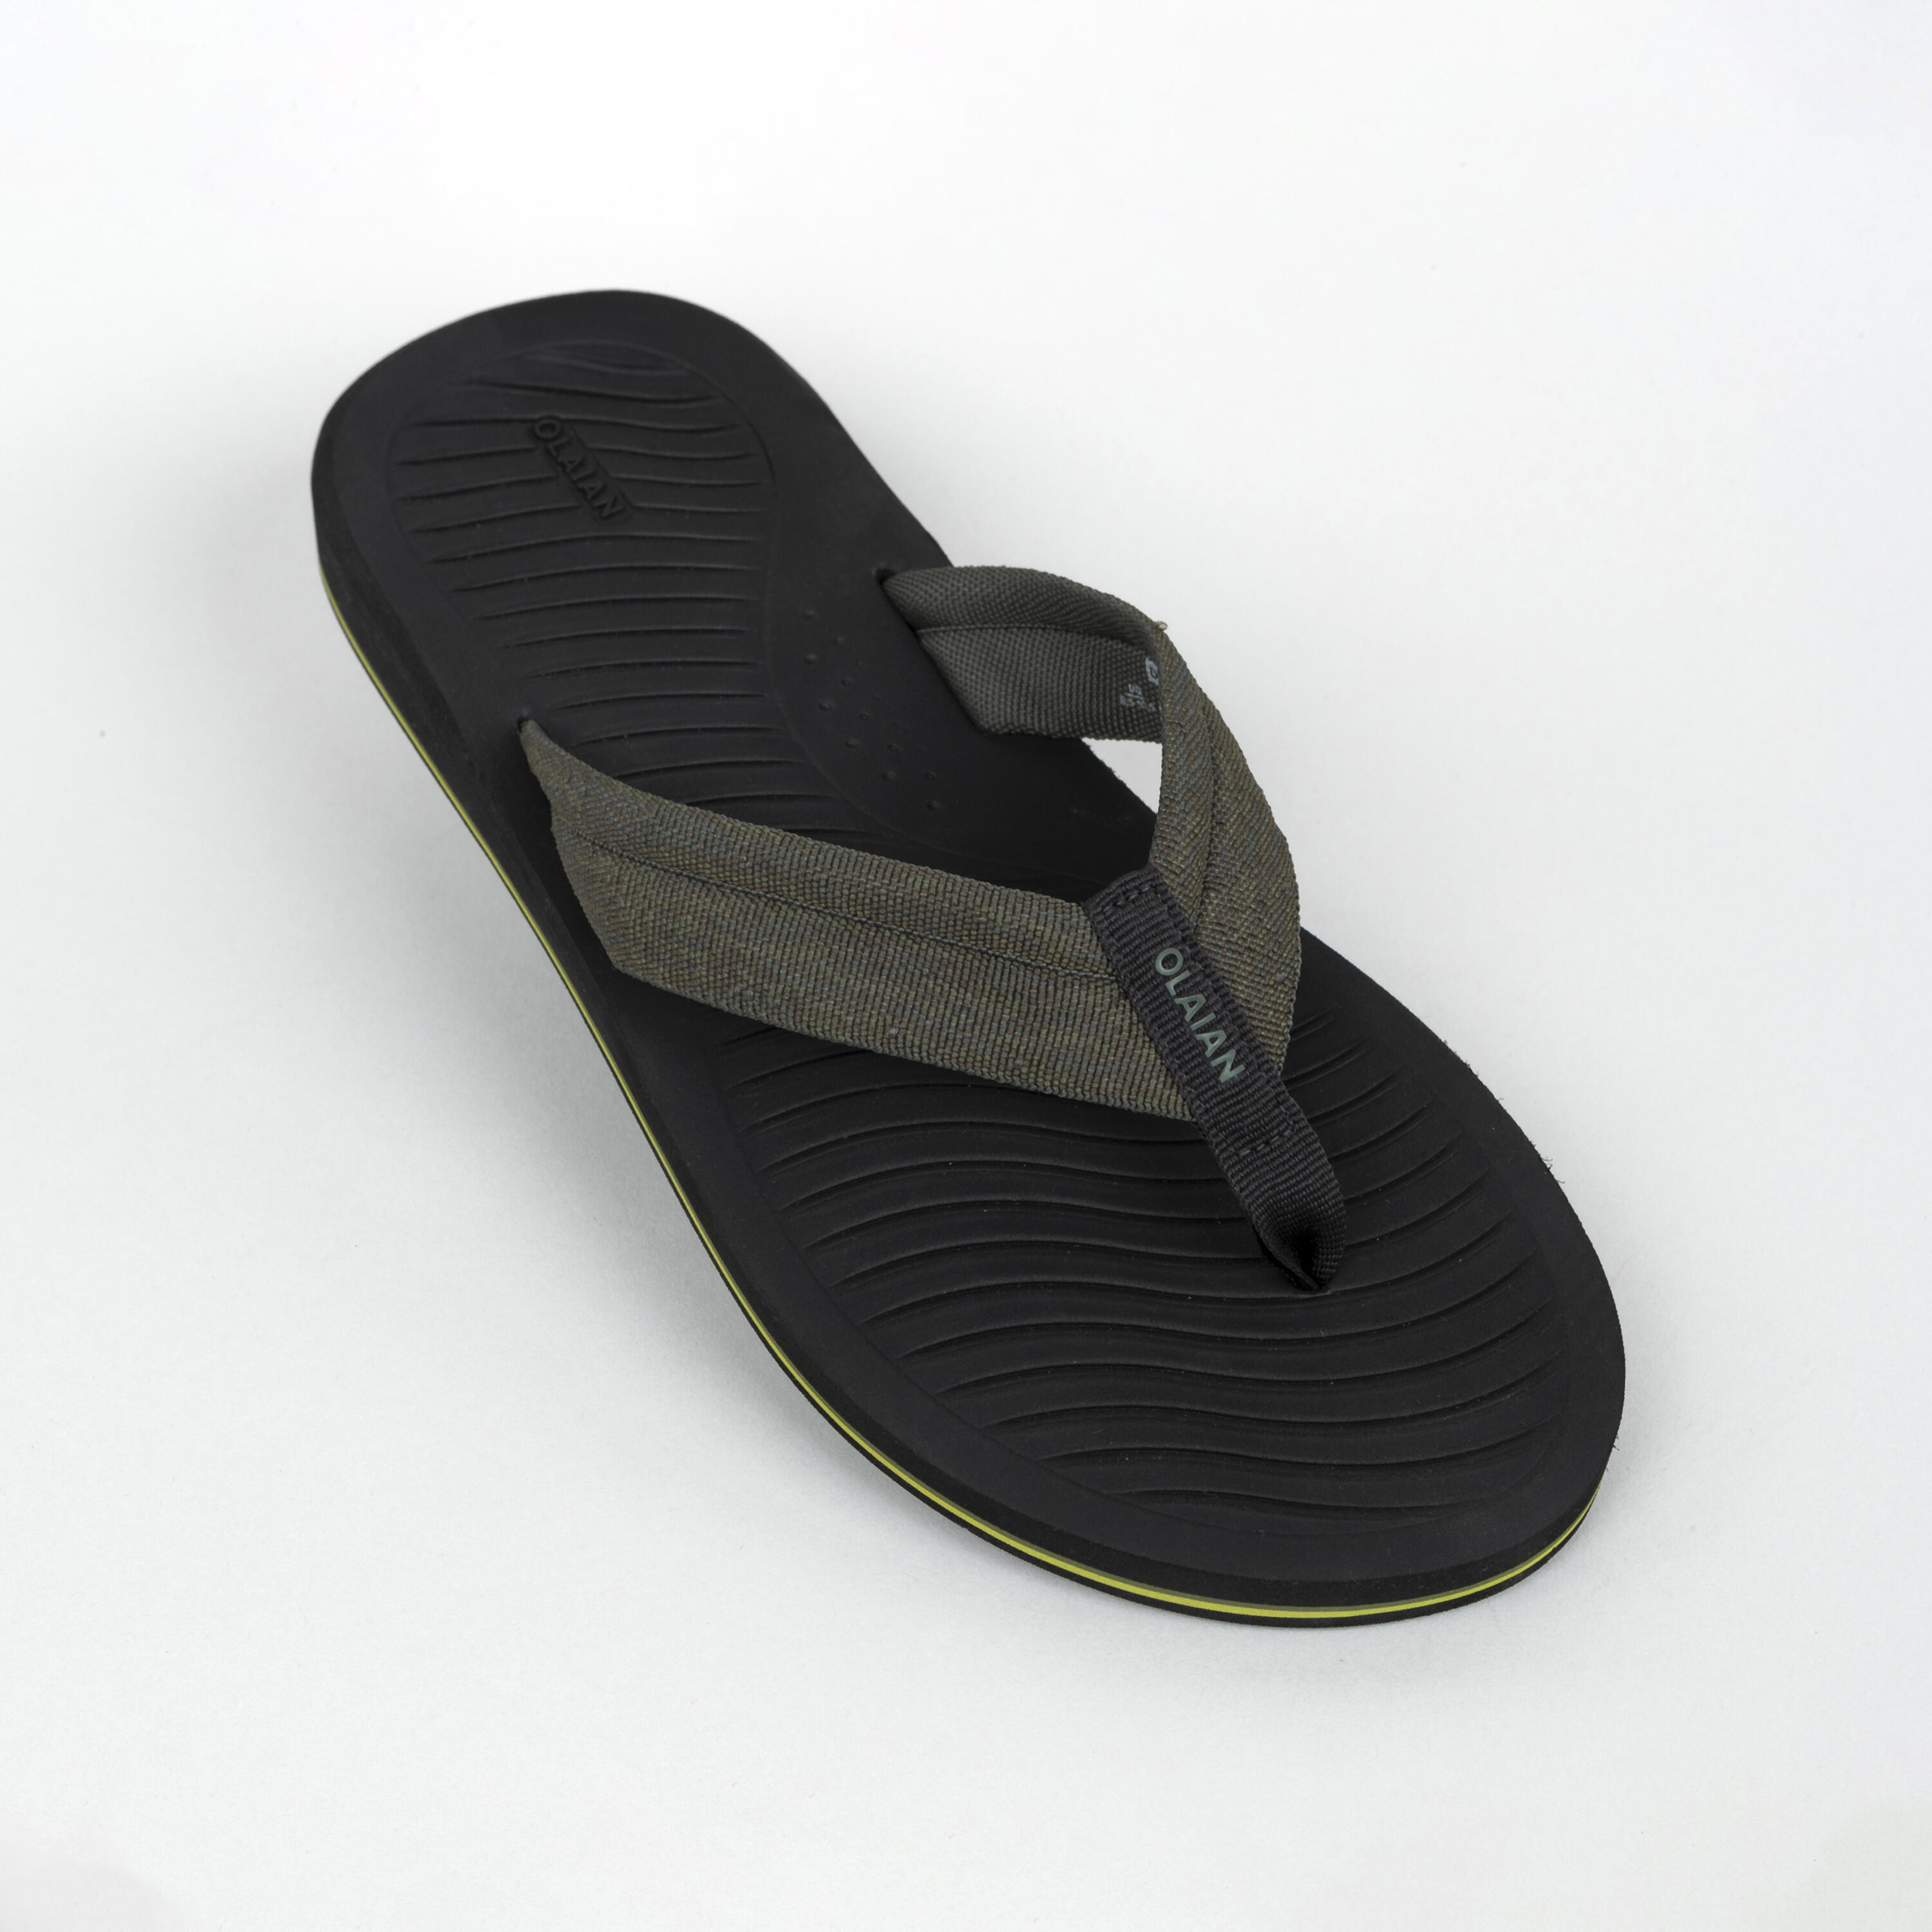 Decathlon Bivouac Sandals Trek 500 | Barefoot Sandal Review